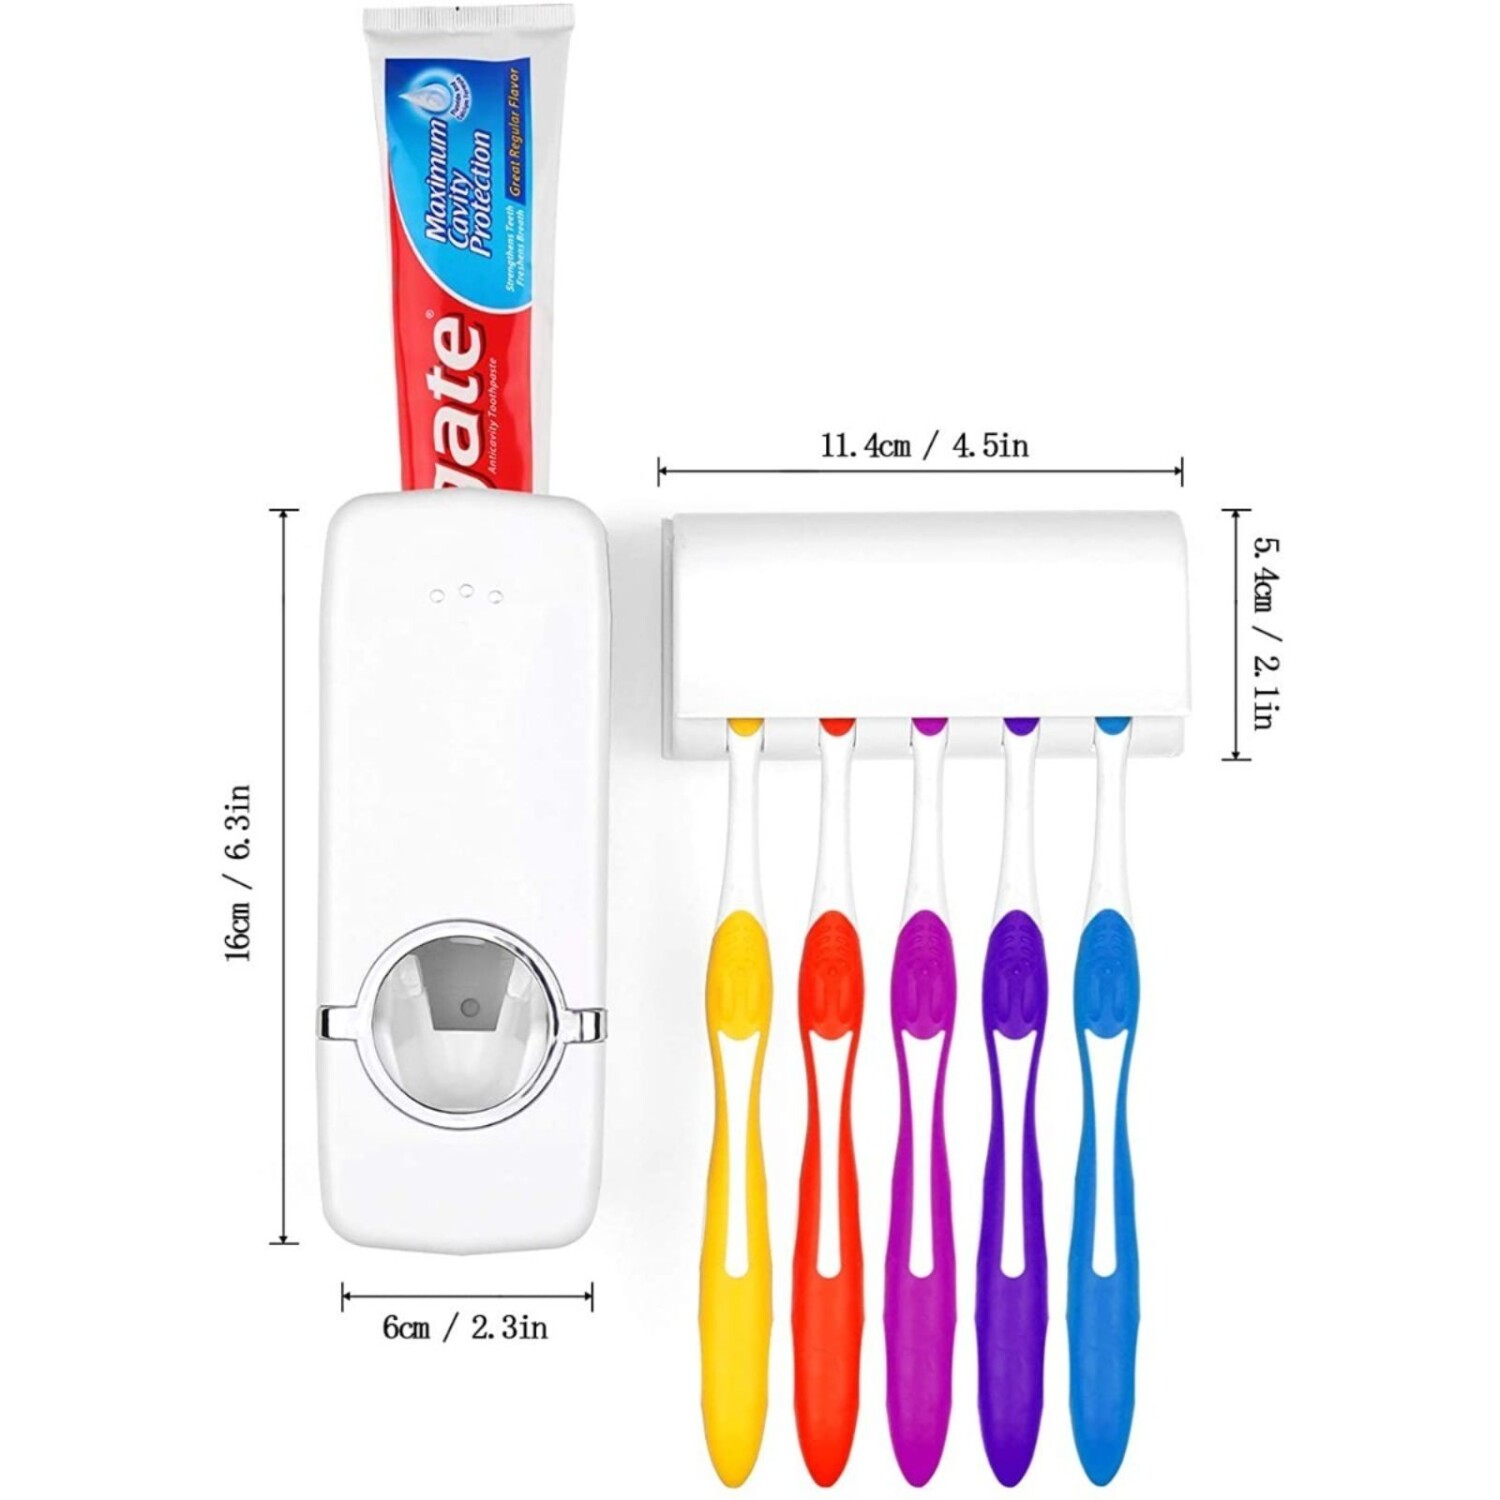 https://f.fcdn.app/imgs/b5d513/www.atrixuy.com/atriuy/4f95/original/catalogo/TBPER135_BLANCO_5/1500-1500/dispensador-automatico-pasta-dental-y-porta-cepillo-color-variante-blanco.jpg